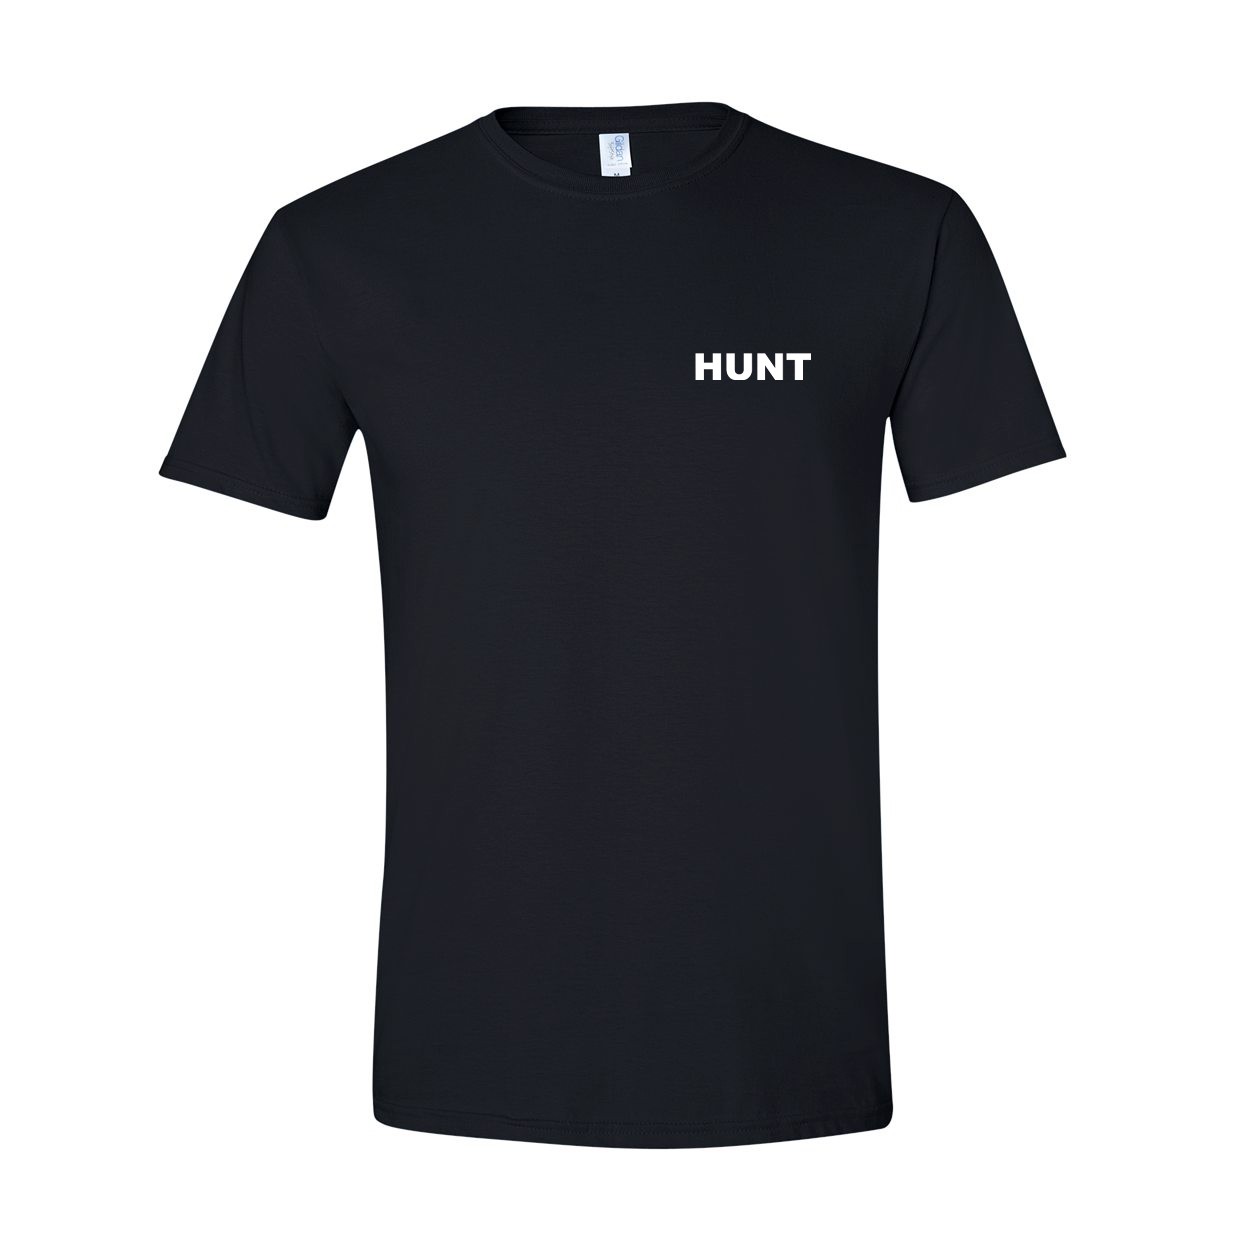 Hunt Brand Logo Night Out T-Shirt Black (White Logo)